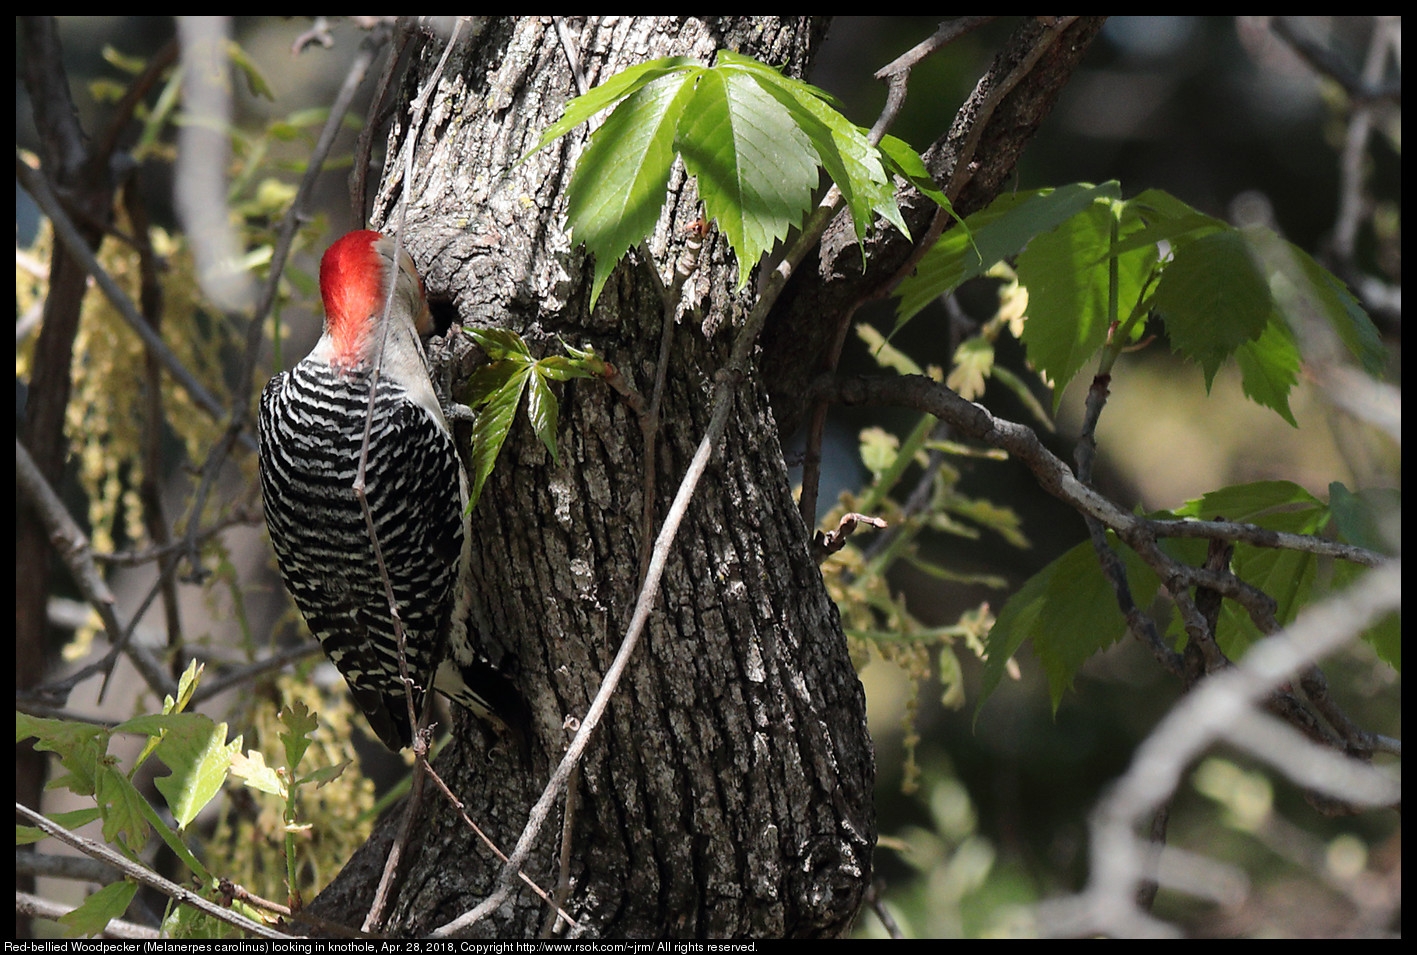 Red-bellied Woodpecker (Melanerpes carolinus) looking in knothole, Apr. 28, 2018